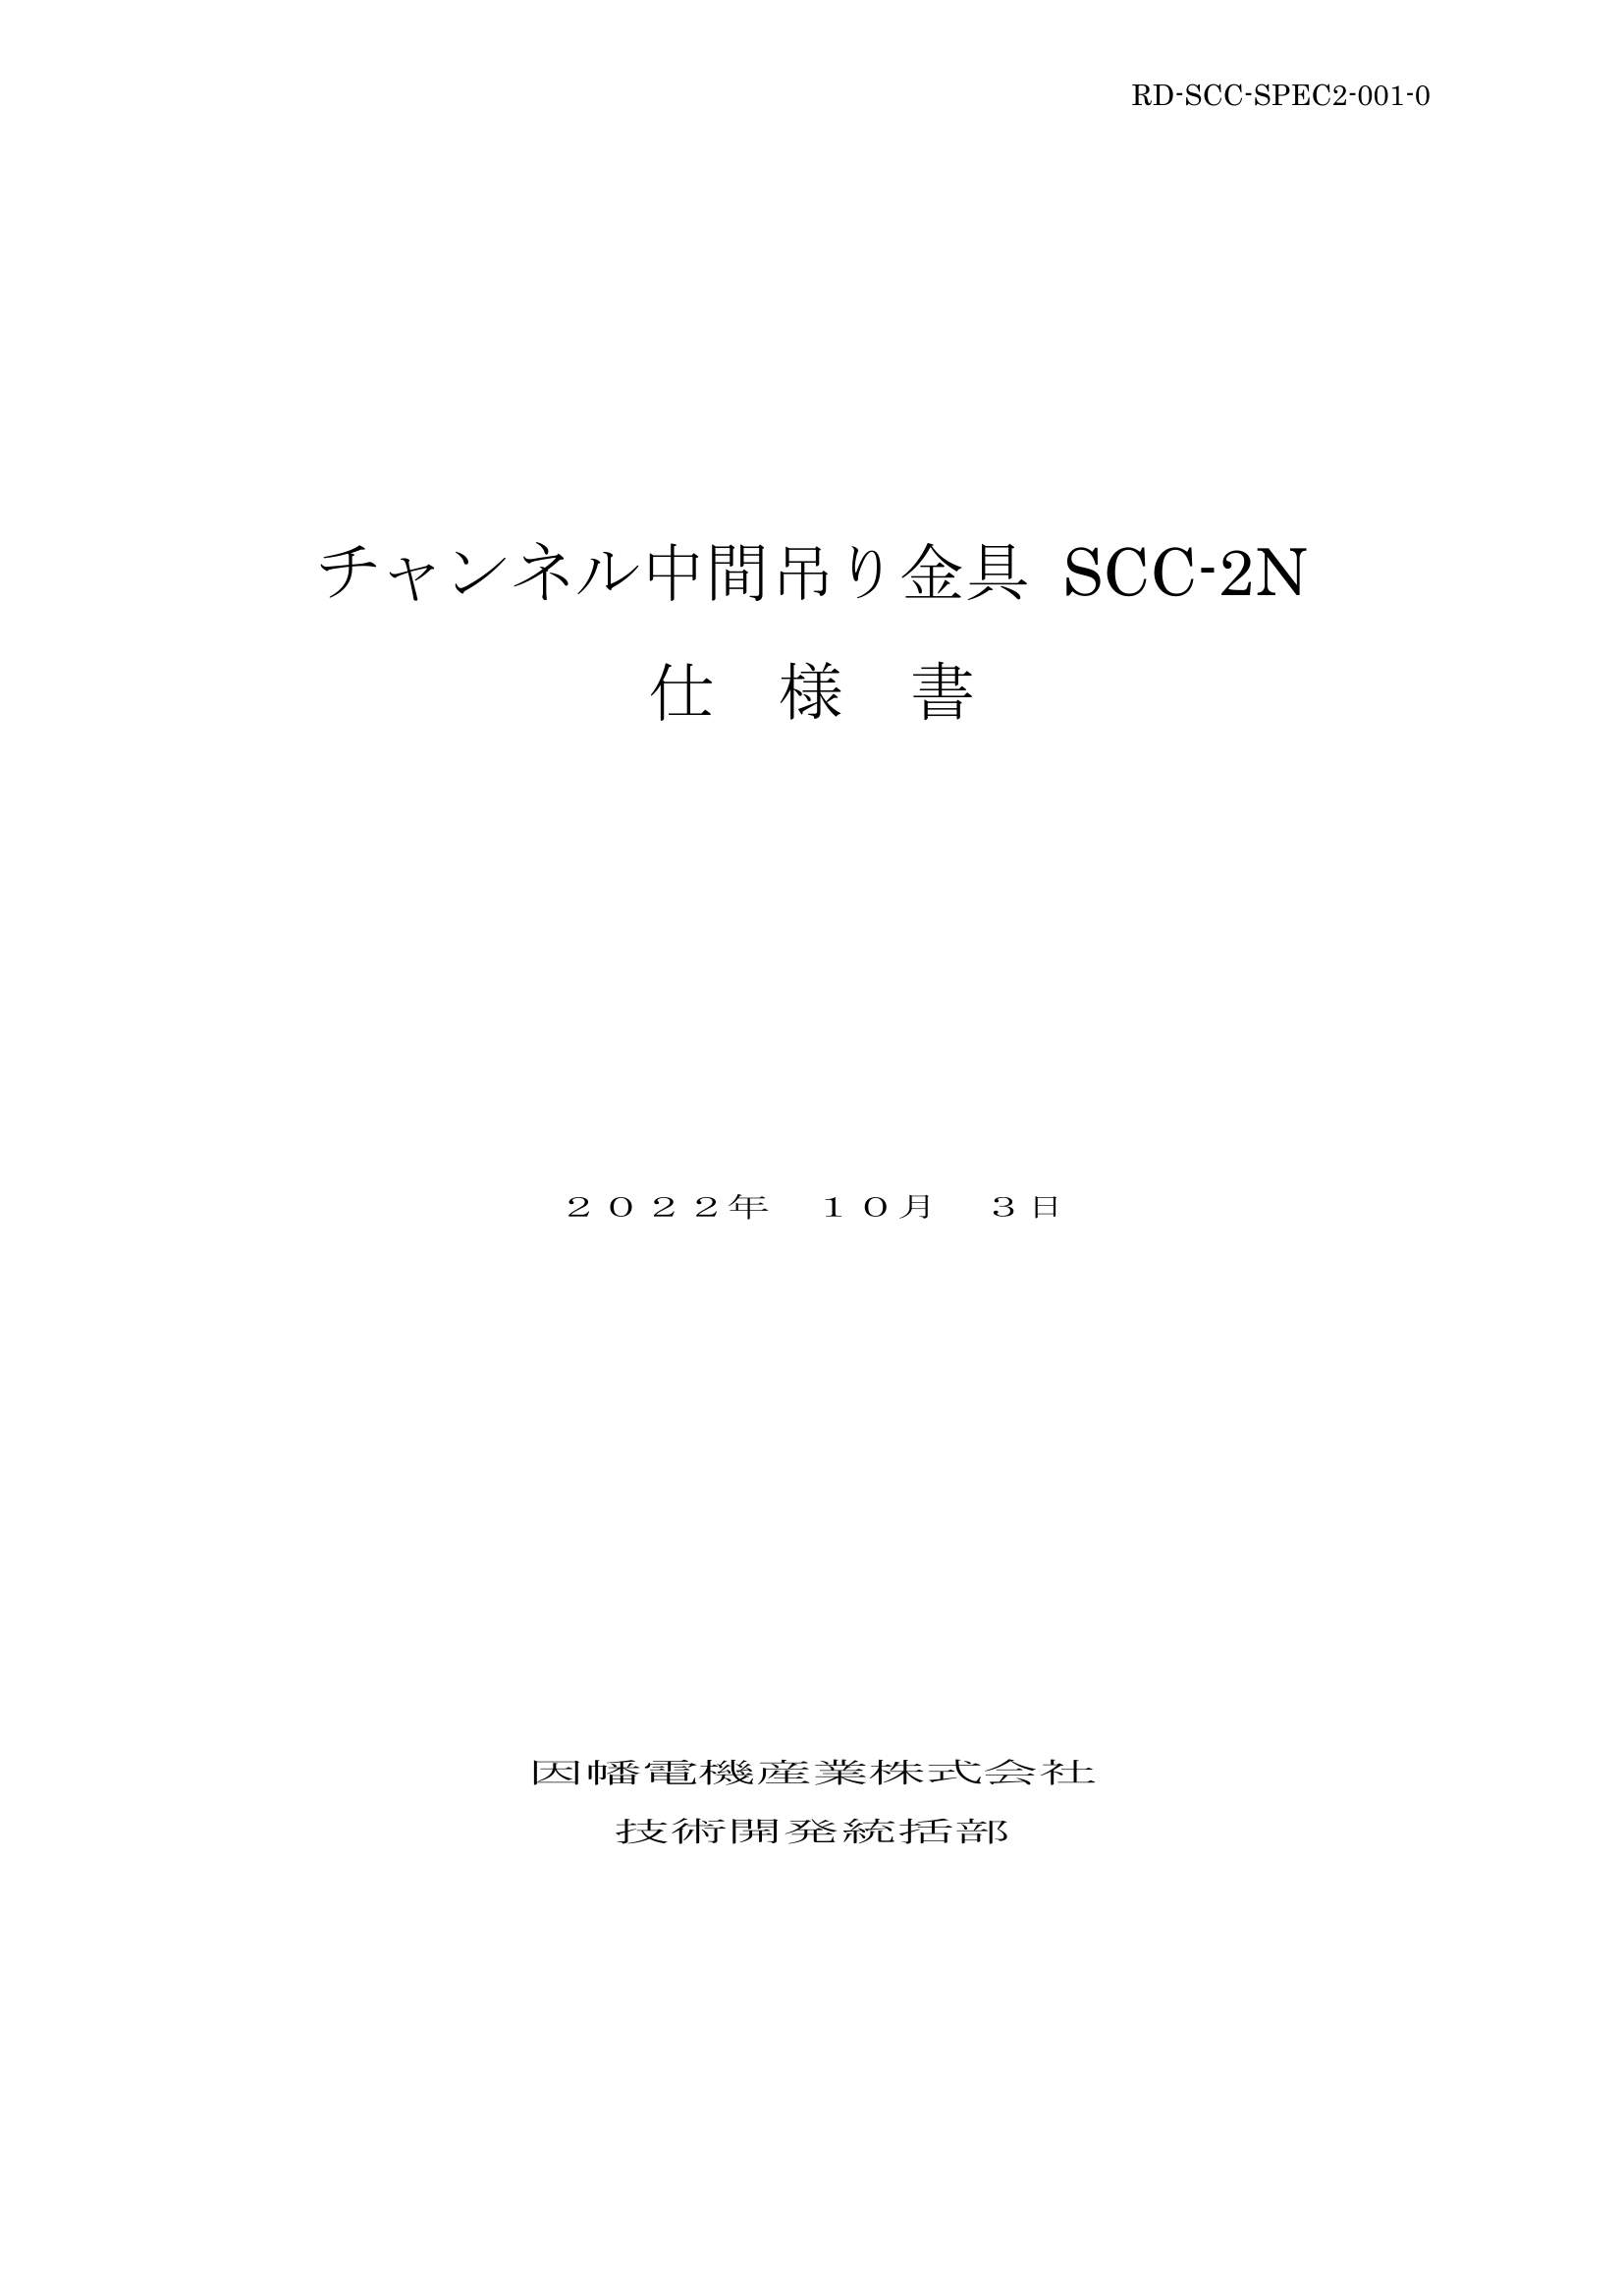 SCC-2N_仕様書_20221003.pdf